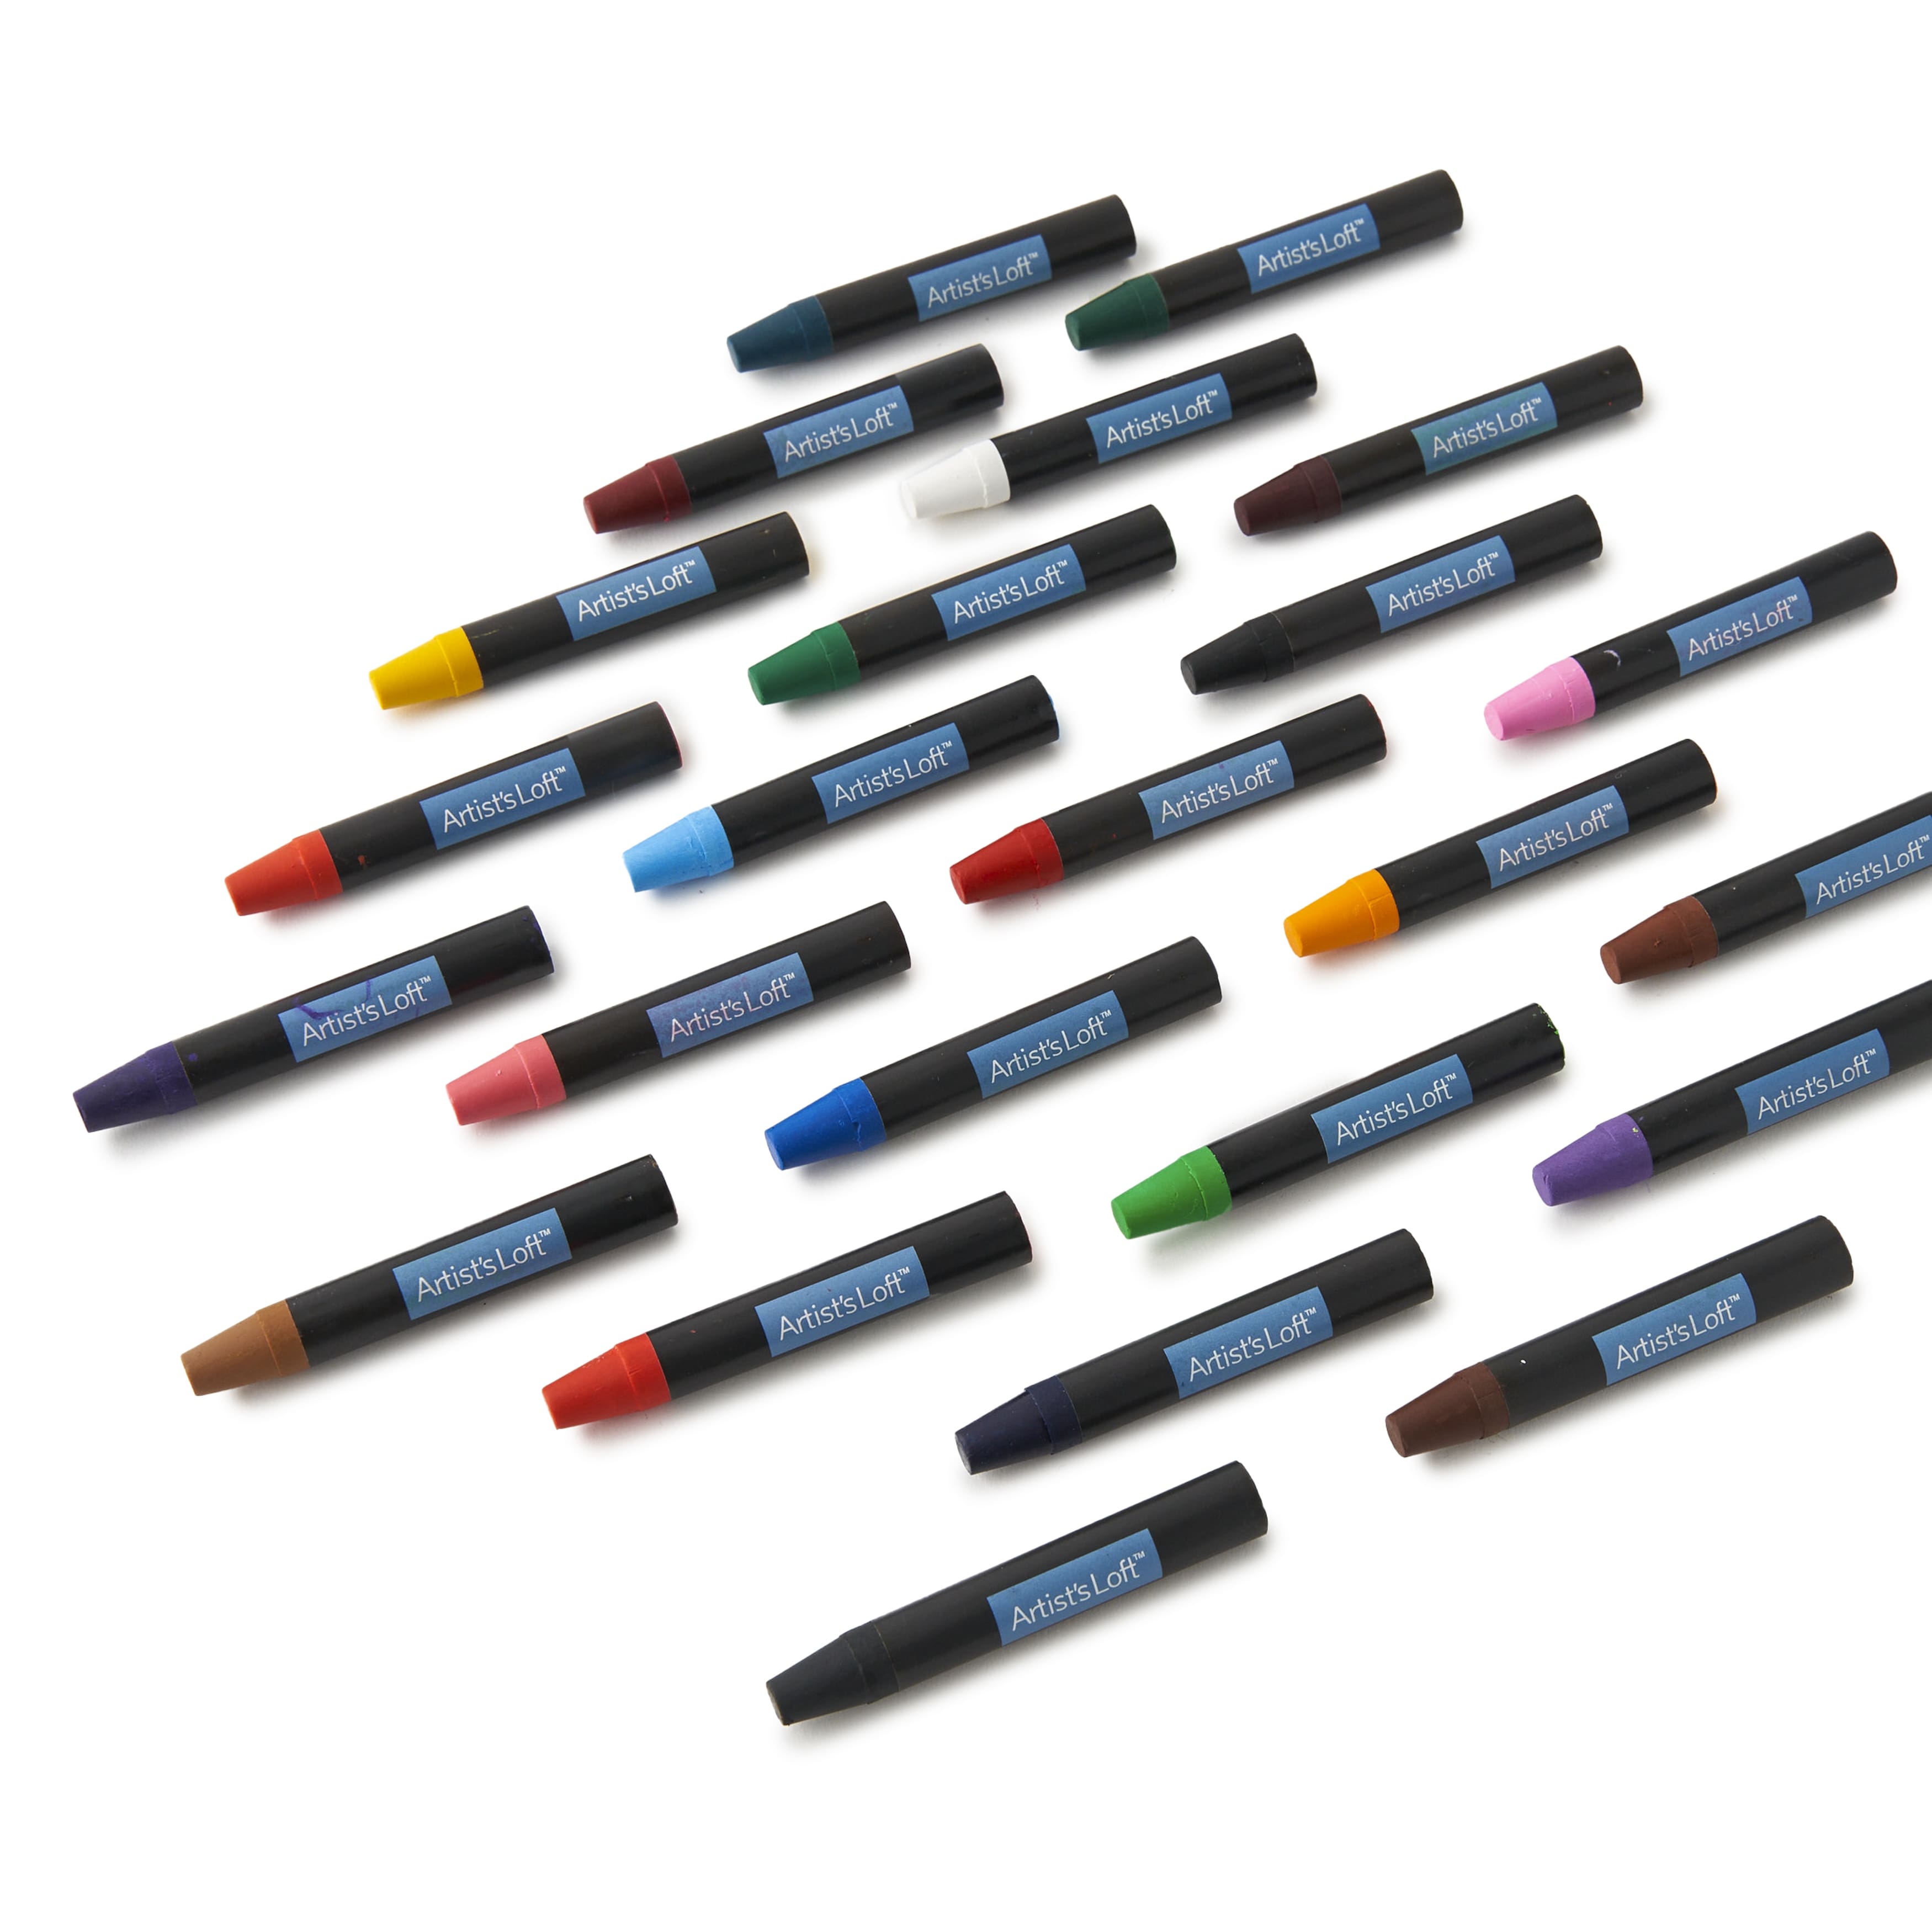 Mobdbu2fphj5cfrb Pastels Crayons - Buy Mobdbu2fphj5cfrb Pastels Crayons  Online at Best Prices In India